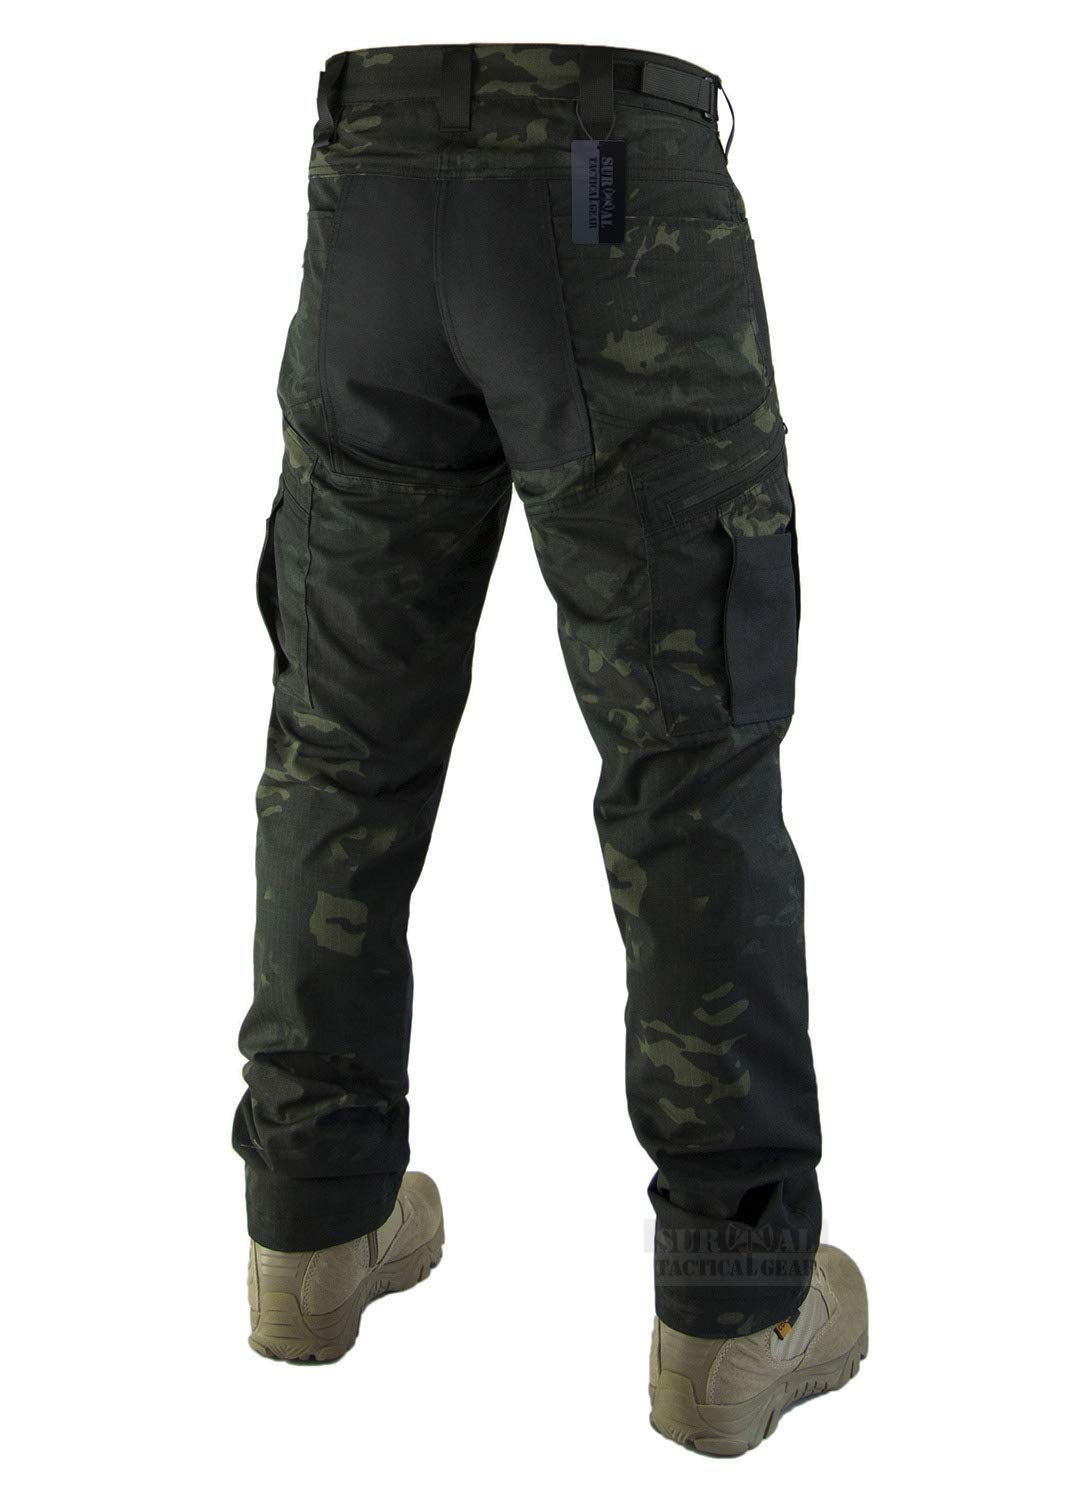 CLEARLUV Airsoft Shirts Multicam Pants Survival Tactical Gear for Men Camo  BDU Uniform Ripstop Tactical Suit Police Riot Gear - AliExpress